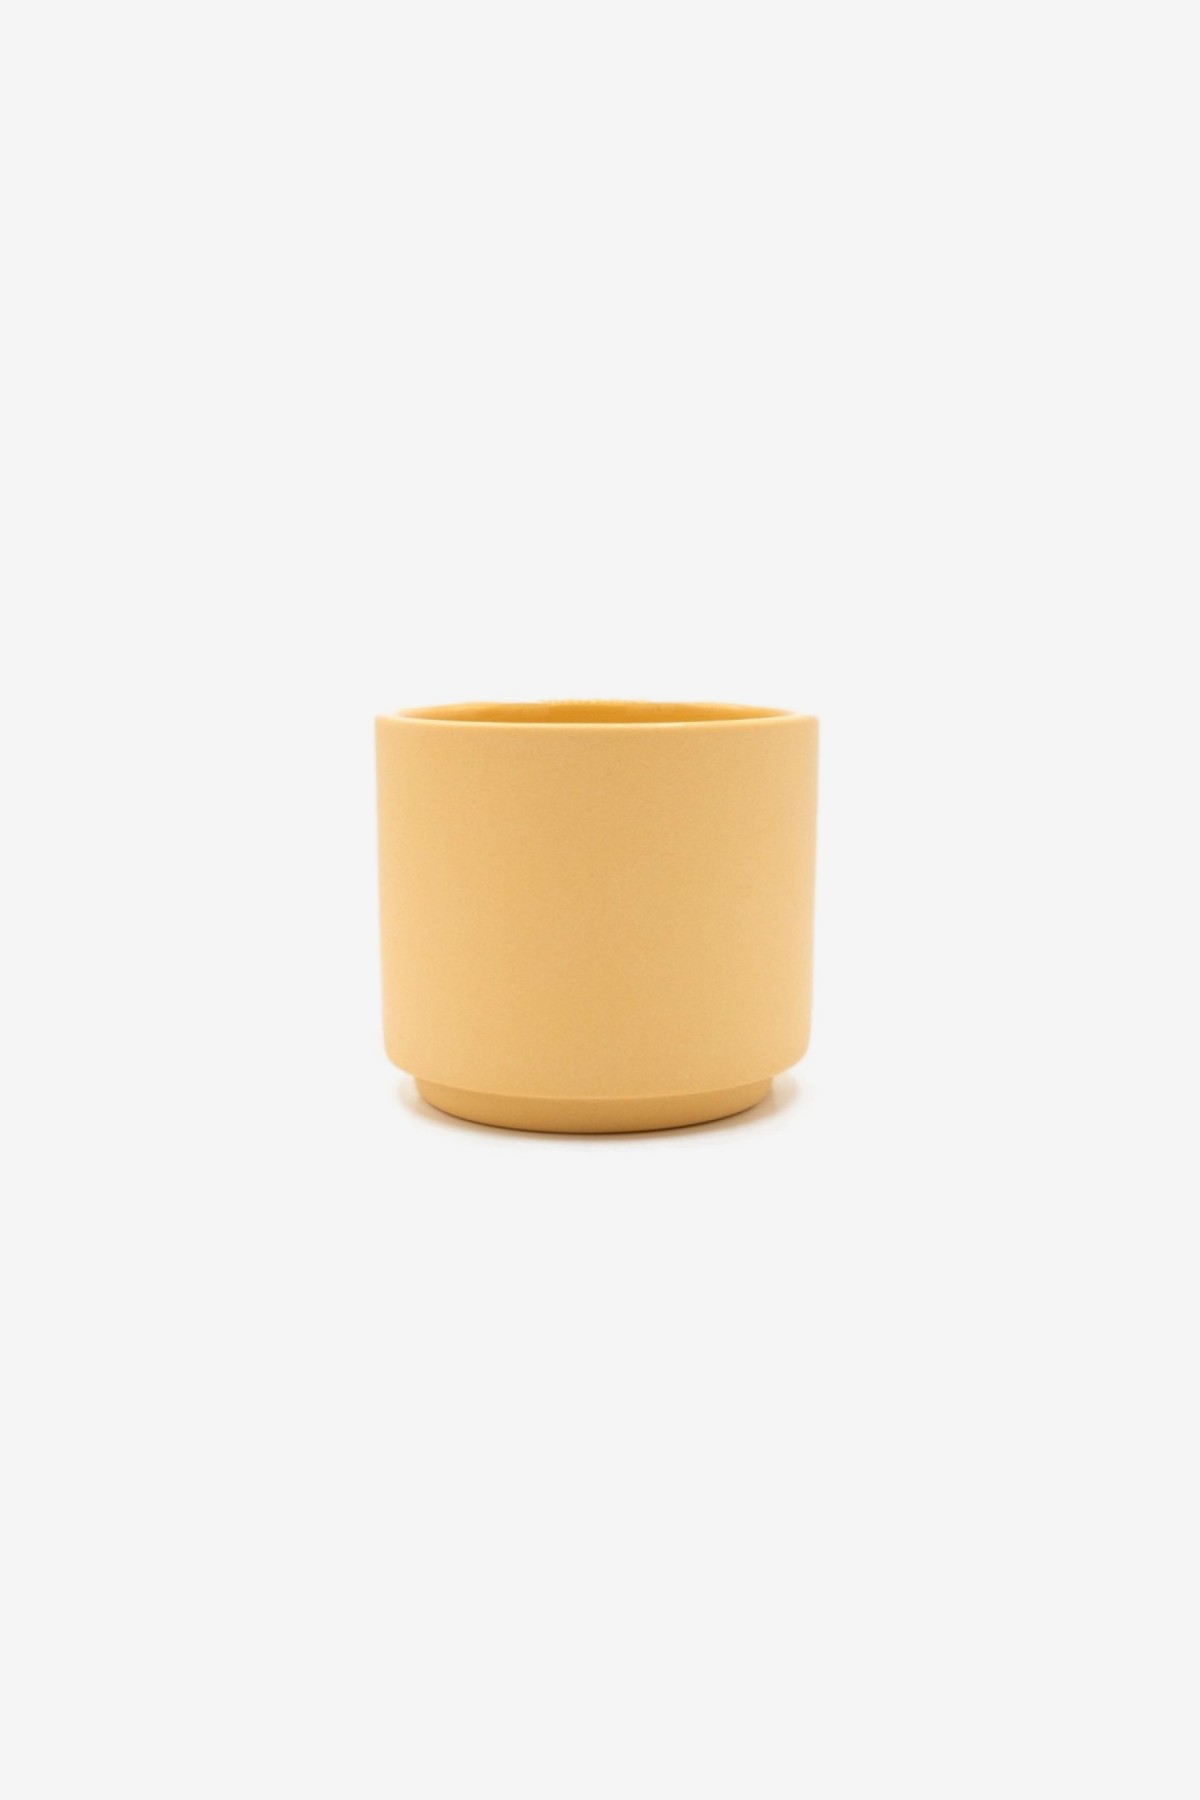 Milou Broersen Stack Cup Medium in Cantaloupe